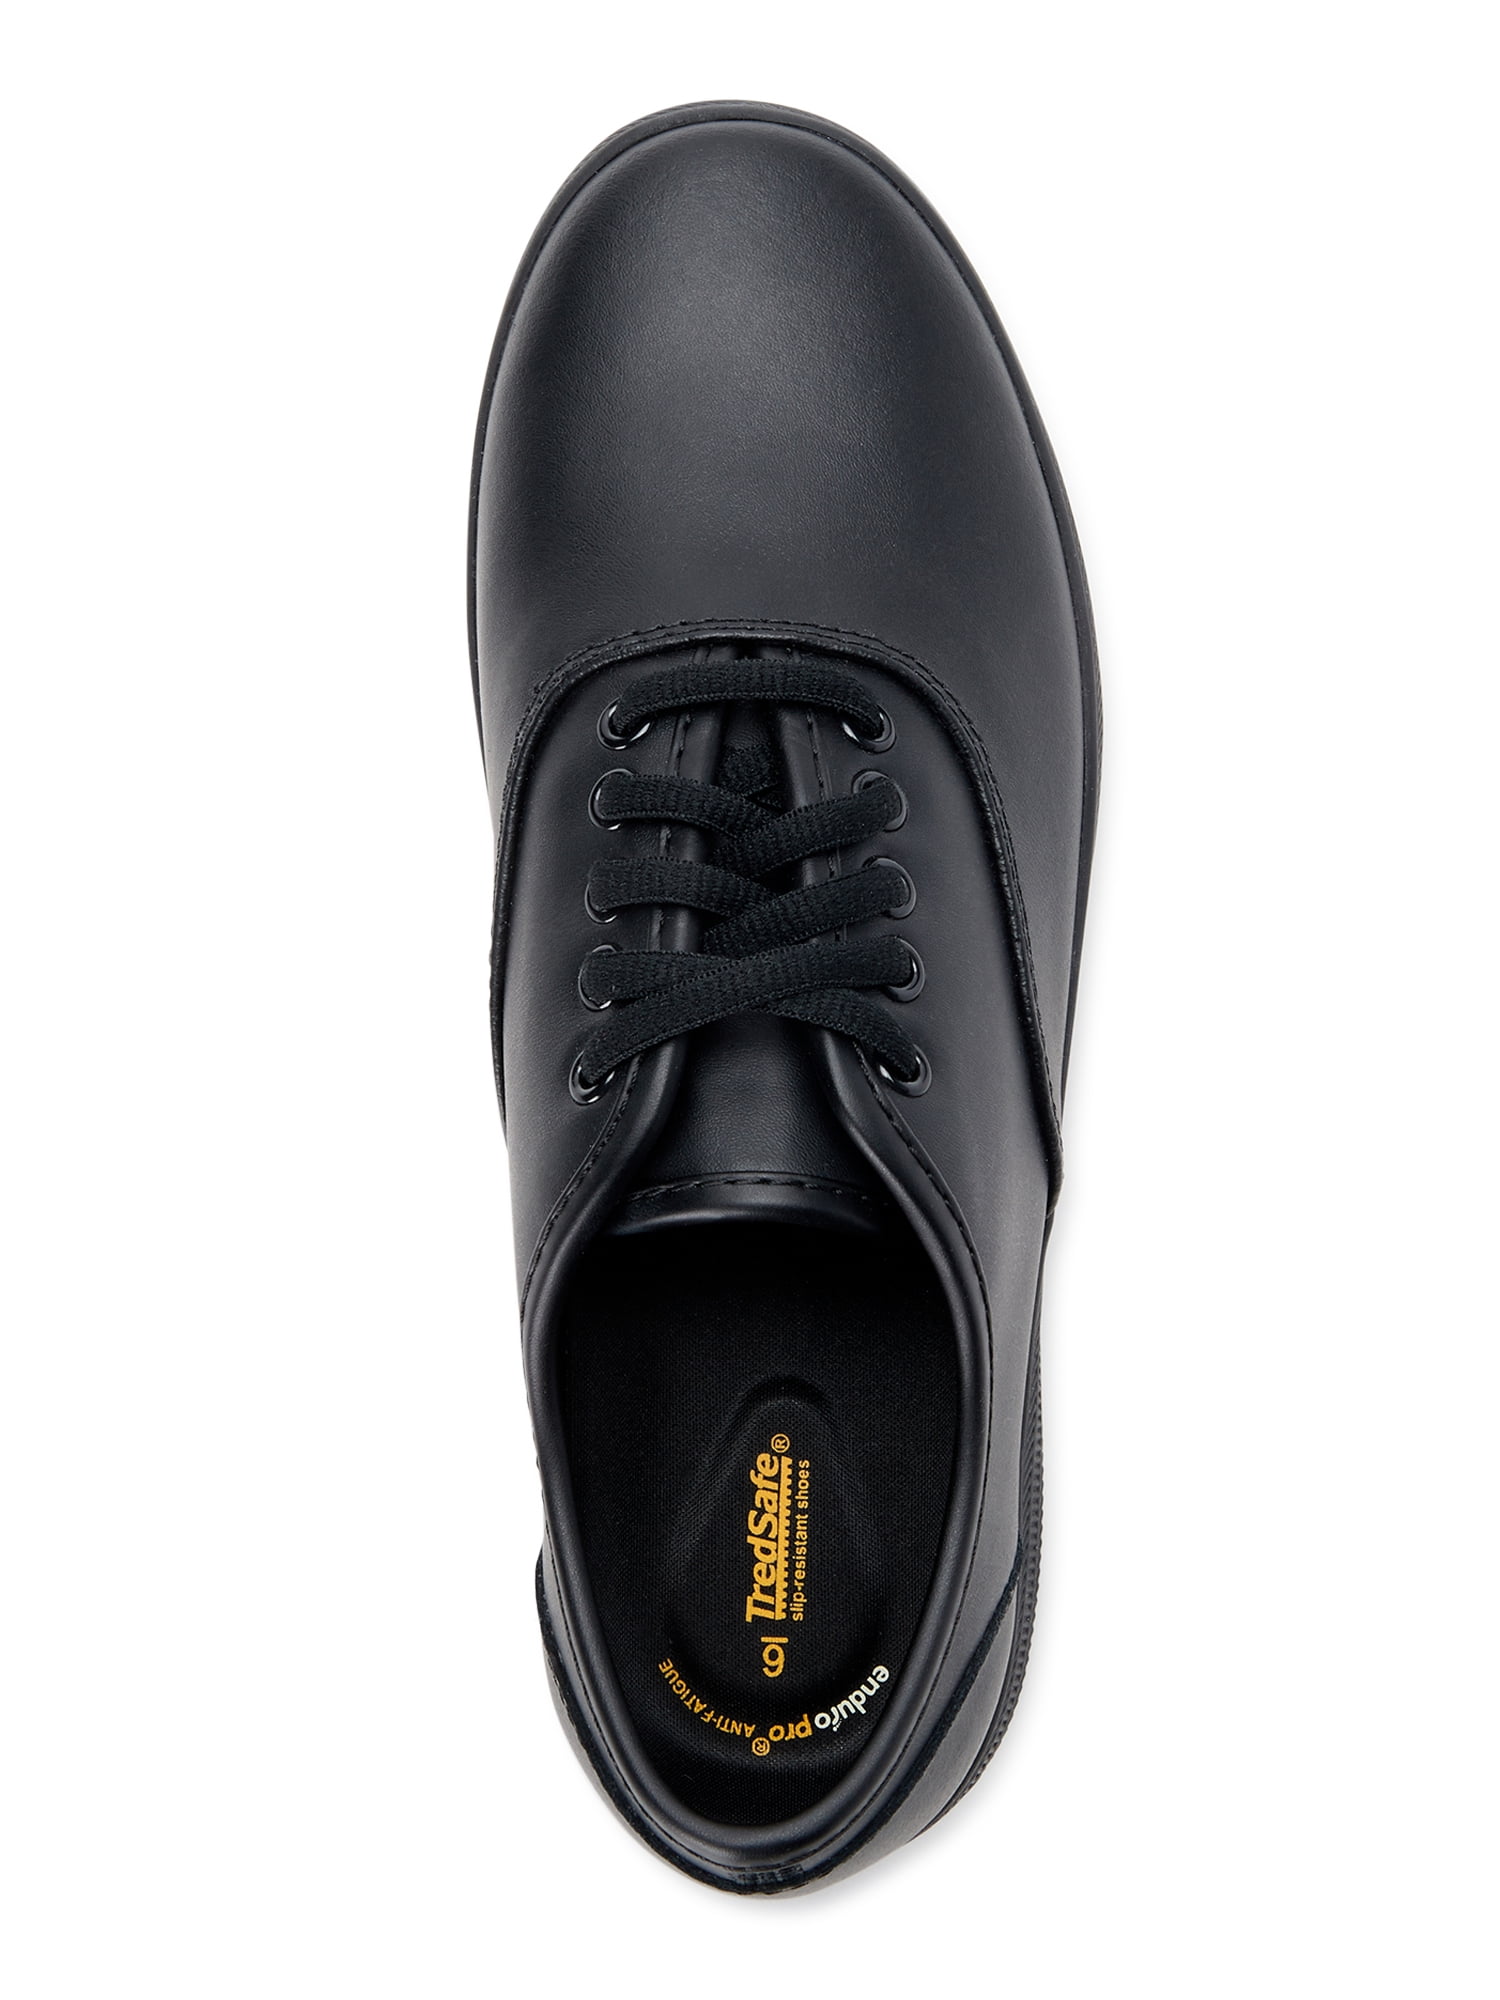 Tredsafe Women'S Kensley Slip Resistant Oxford Shoes 